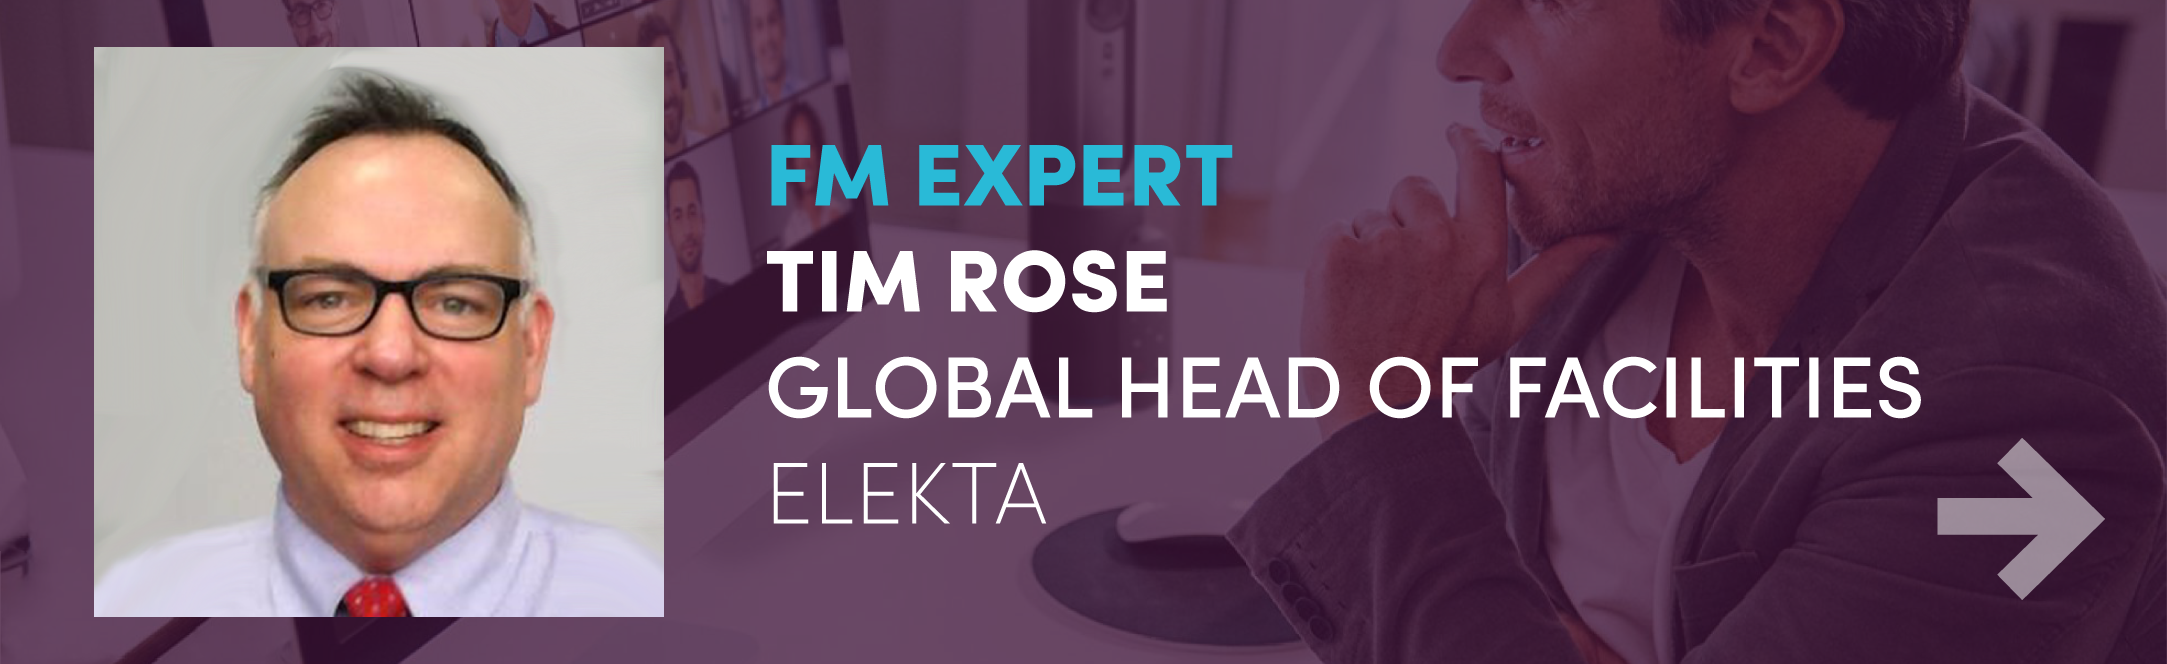 Tim Rose fm expert global head of facilities